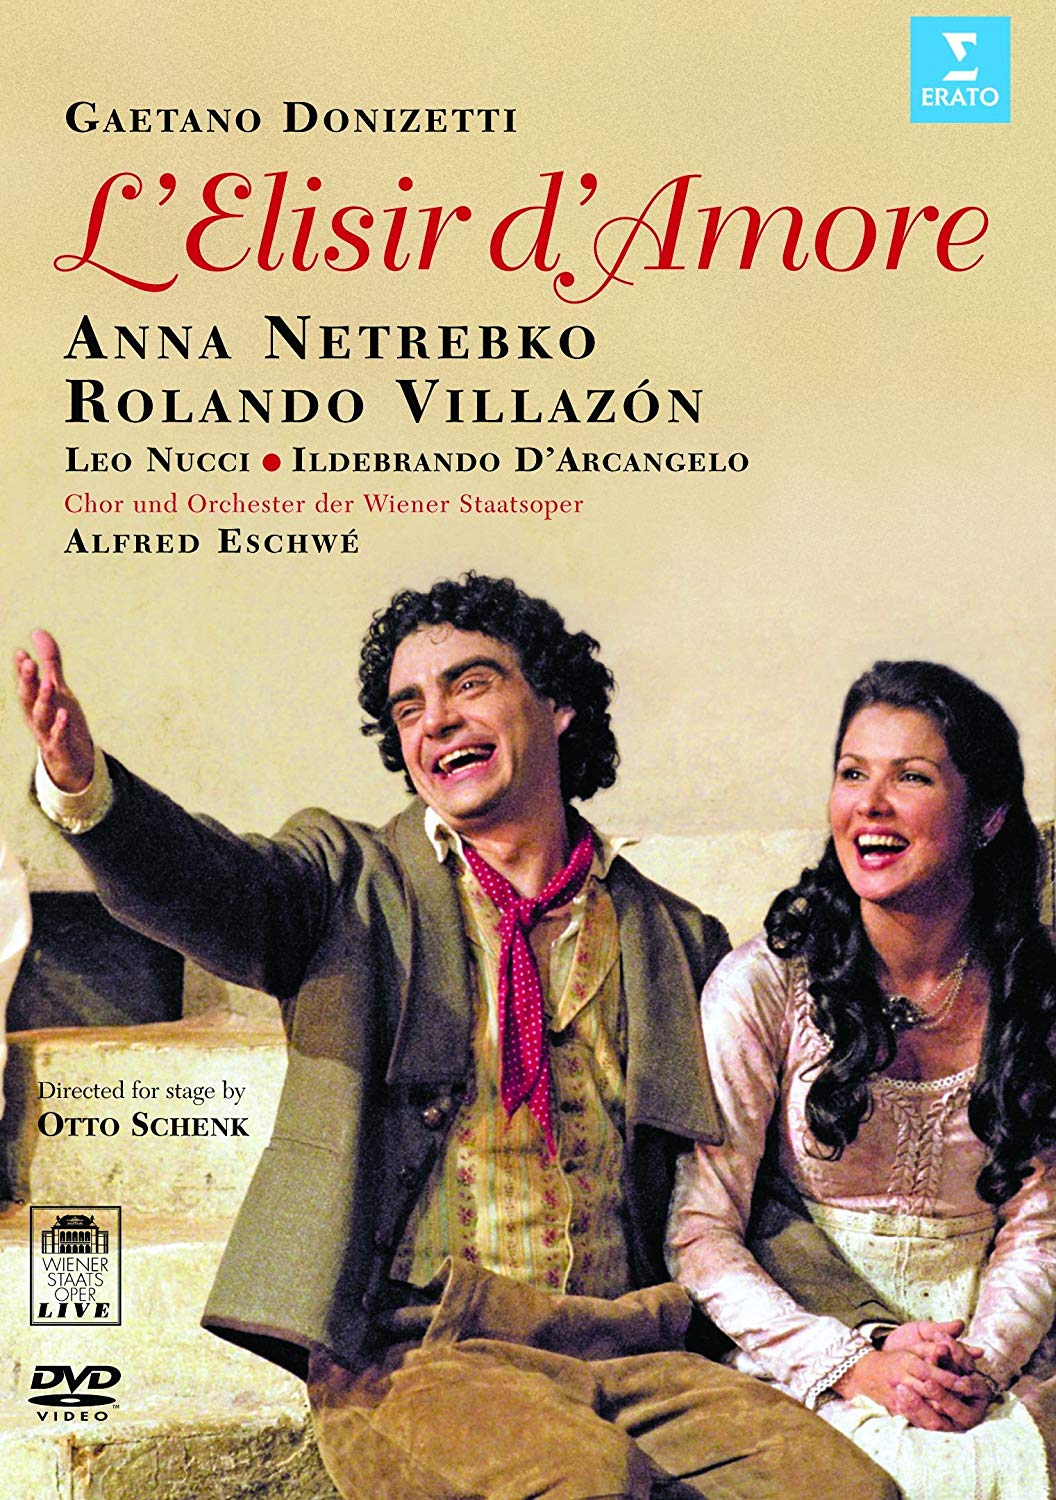 Donizetti: L\'Elisir d\'Amore | Gaetano Donizetti, Anna Netrebko, Rolando Villazon, Wiener Staatsoper